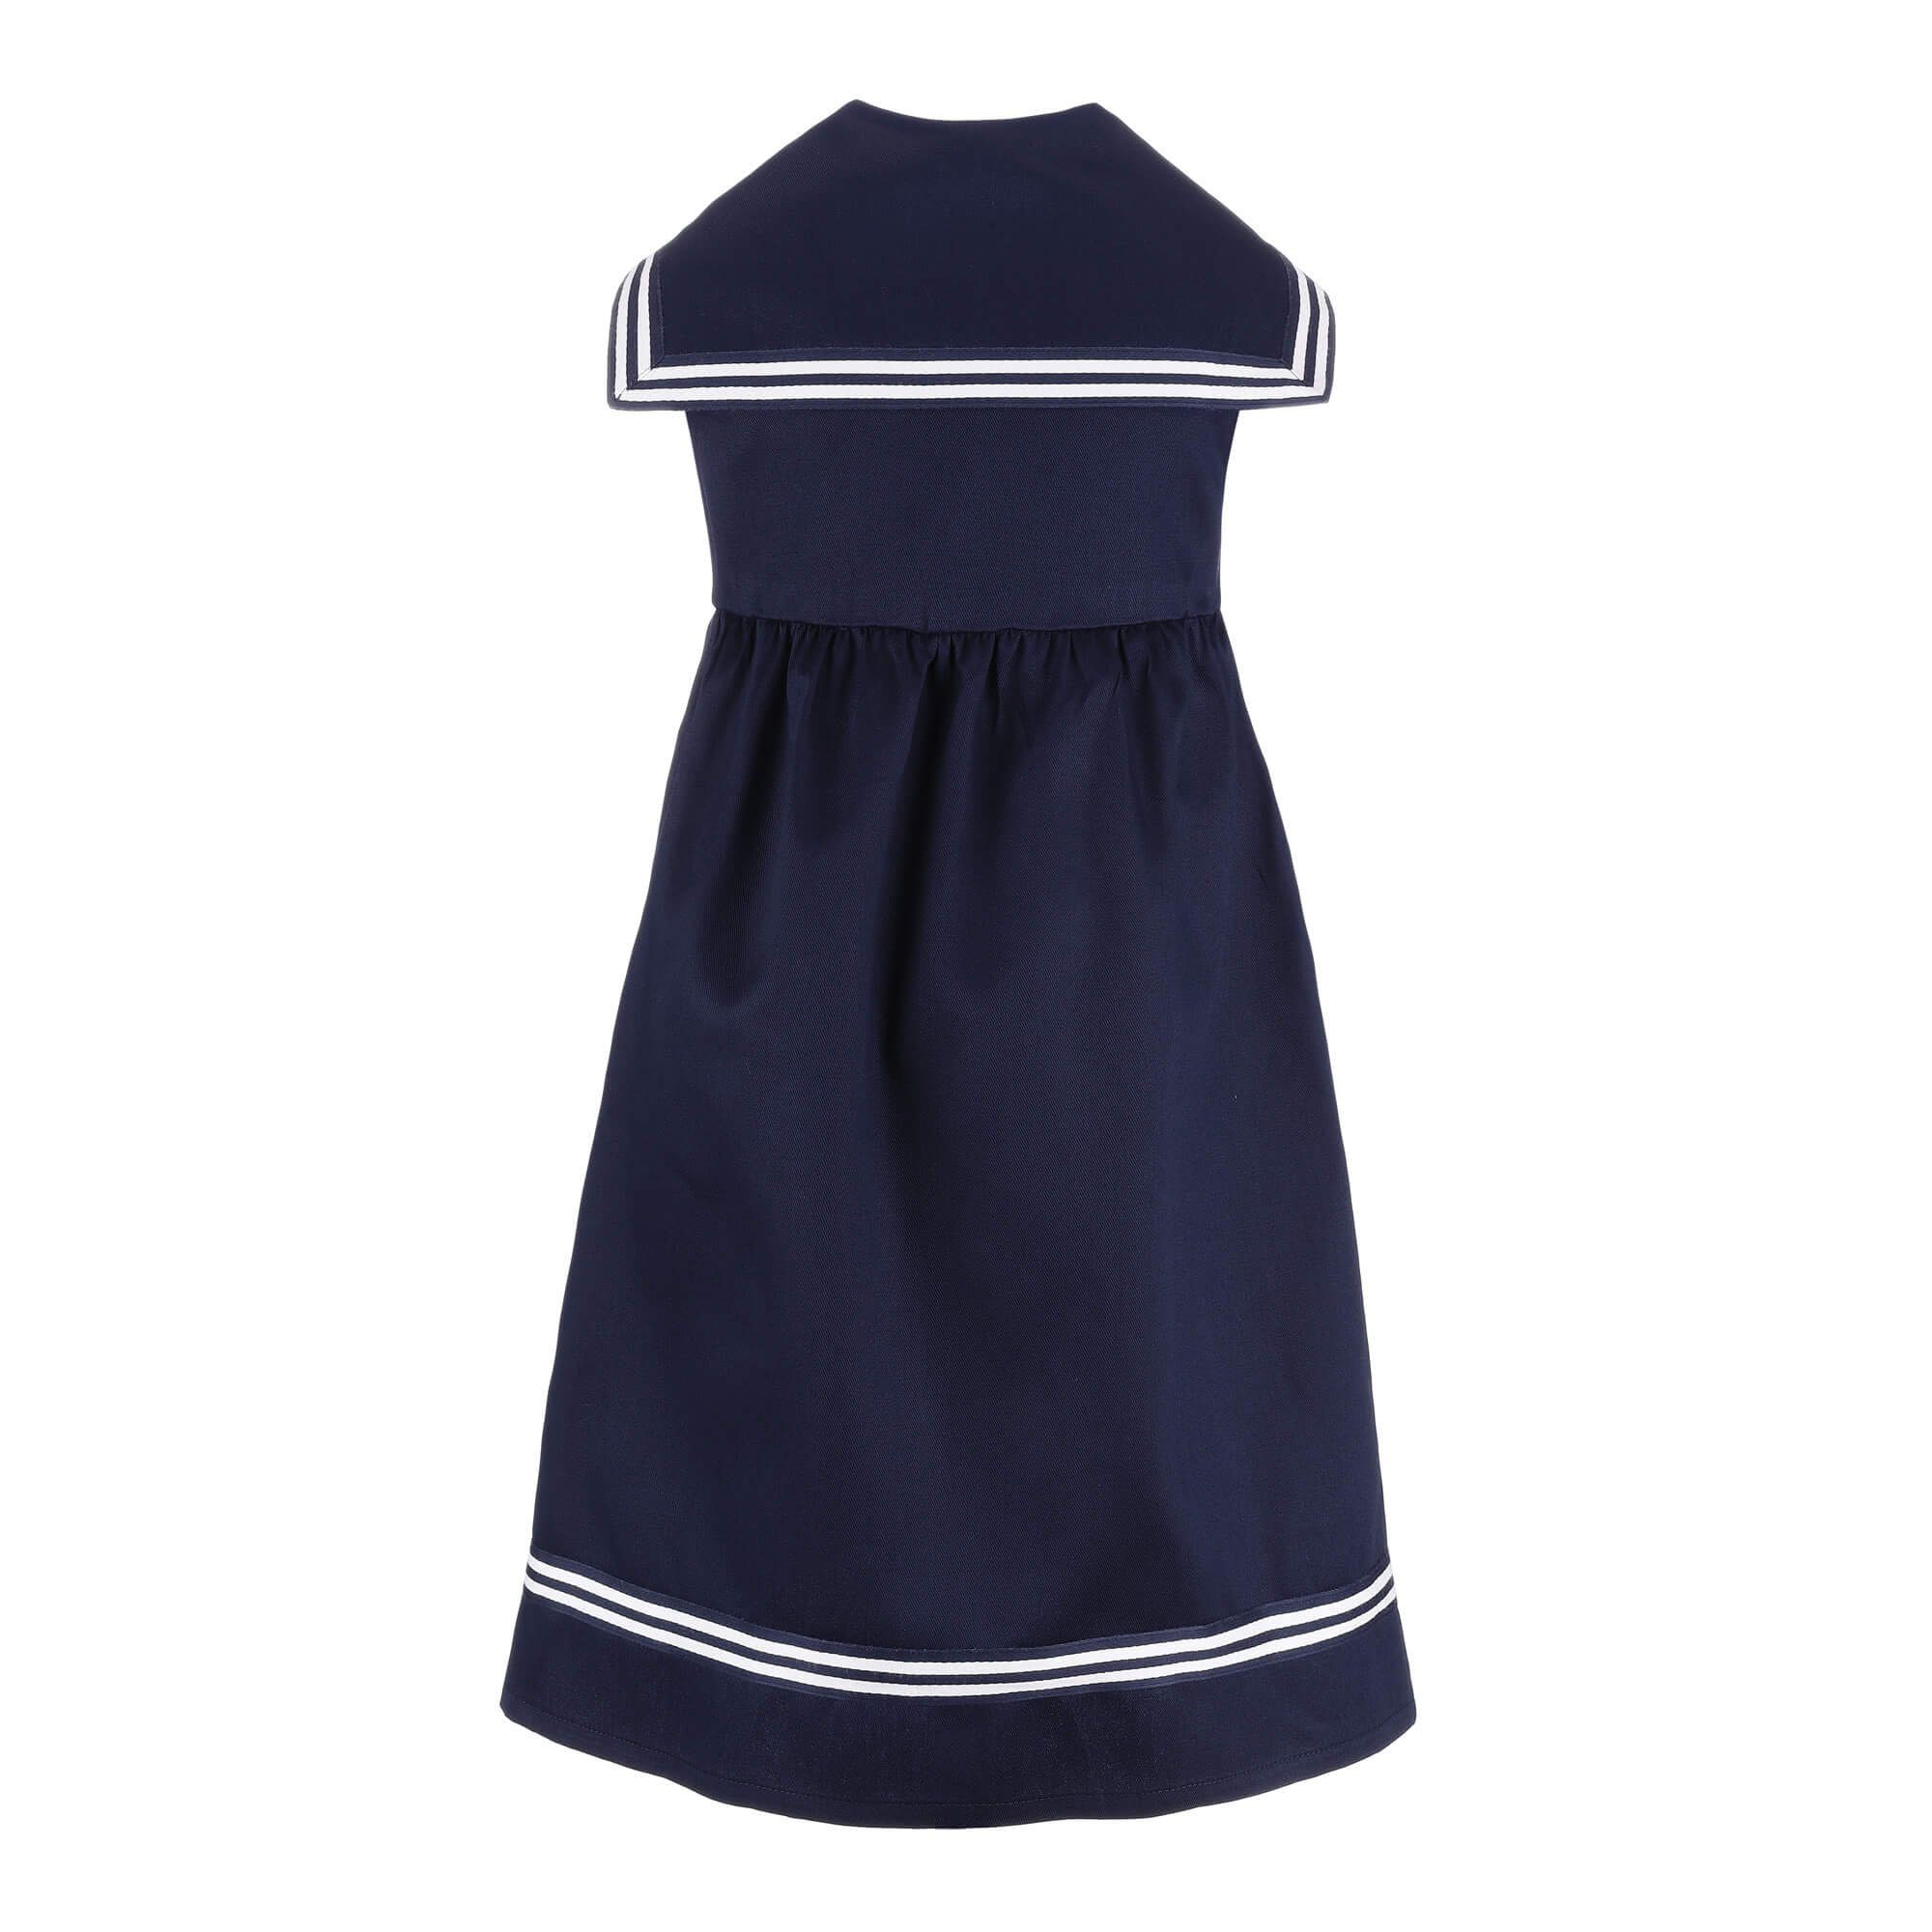 mit Kragen Sommerkleid - Kinder Maritimes Matrosenkleid ärmellos Kleid marine großem modAS (16)